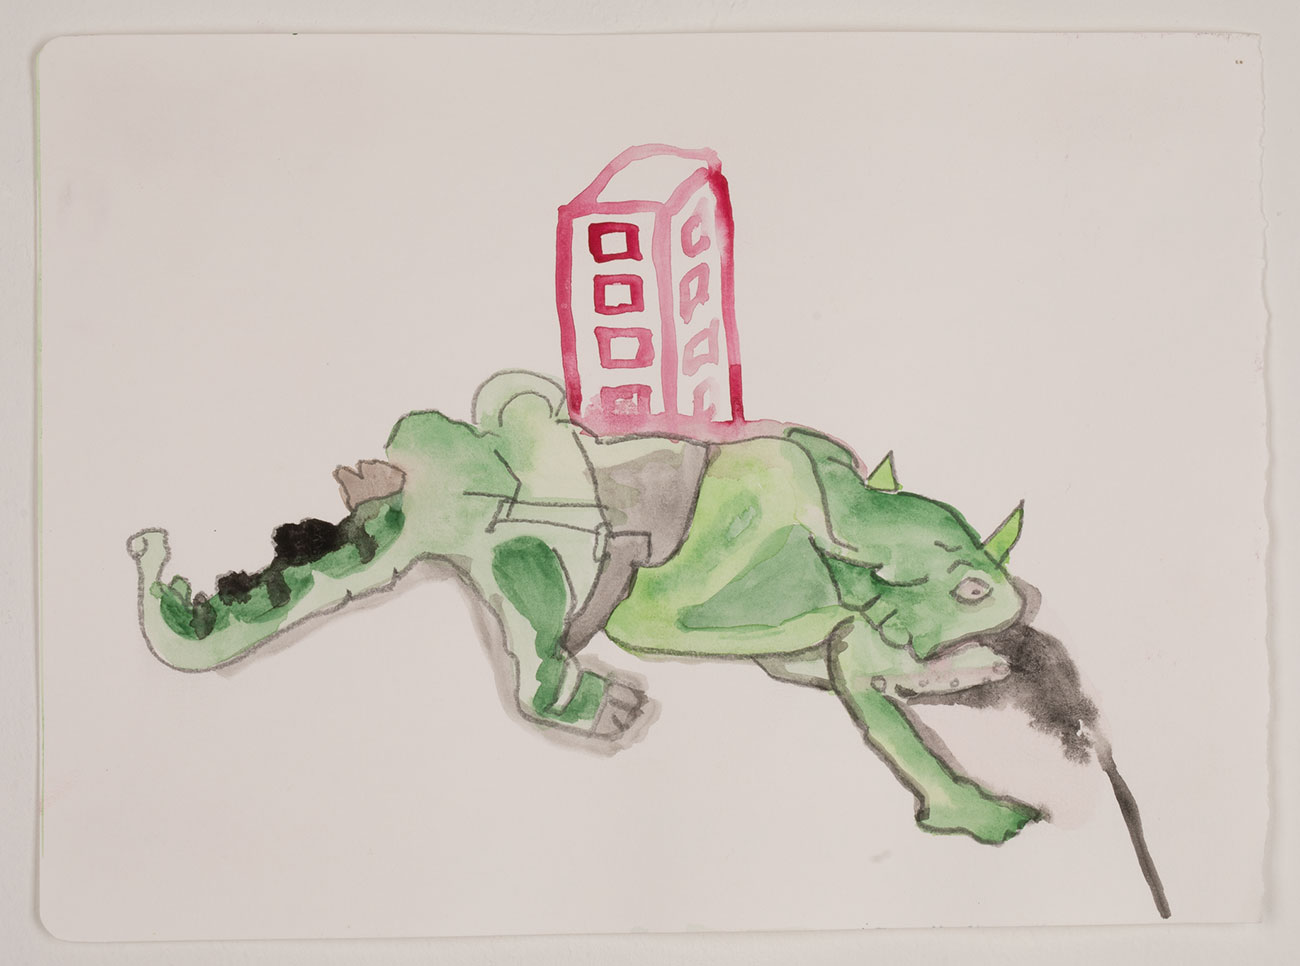 Monstre, 2020 - Watercolor on paper 17.5 x 24 cm